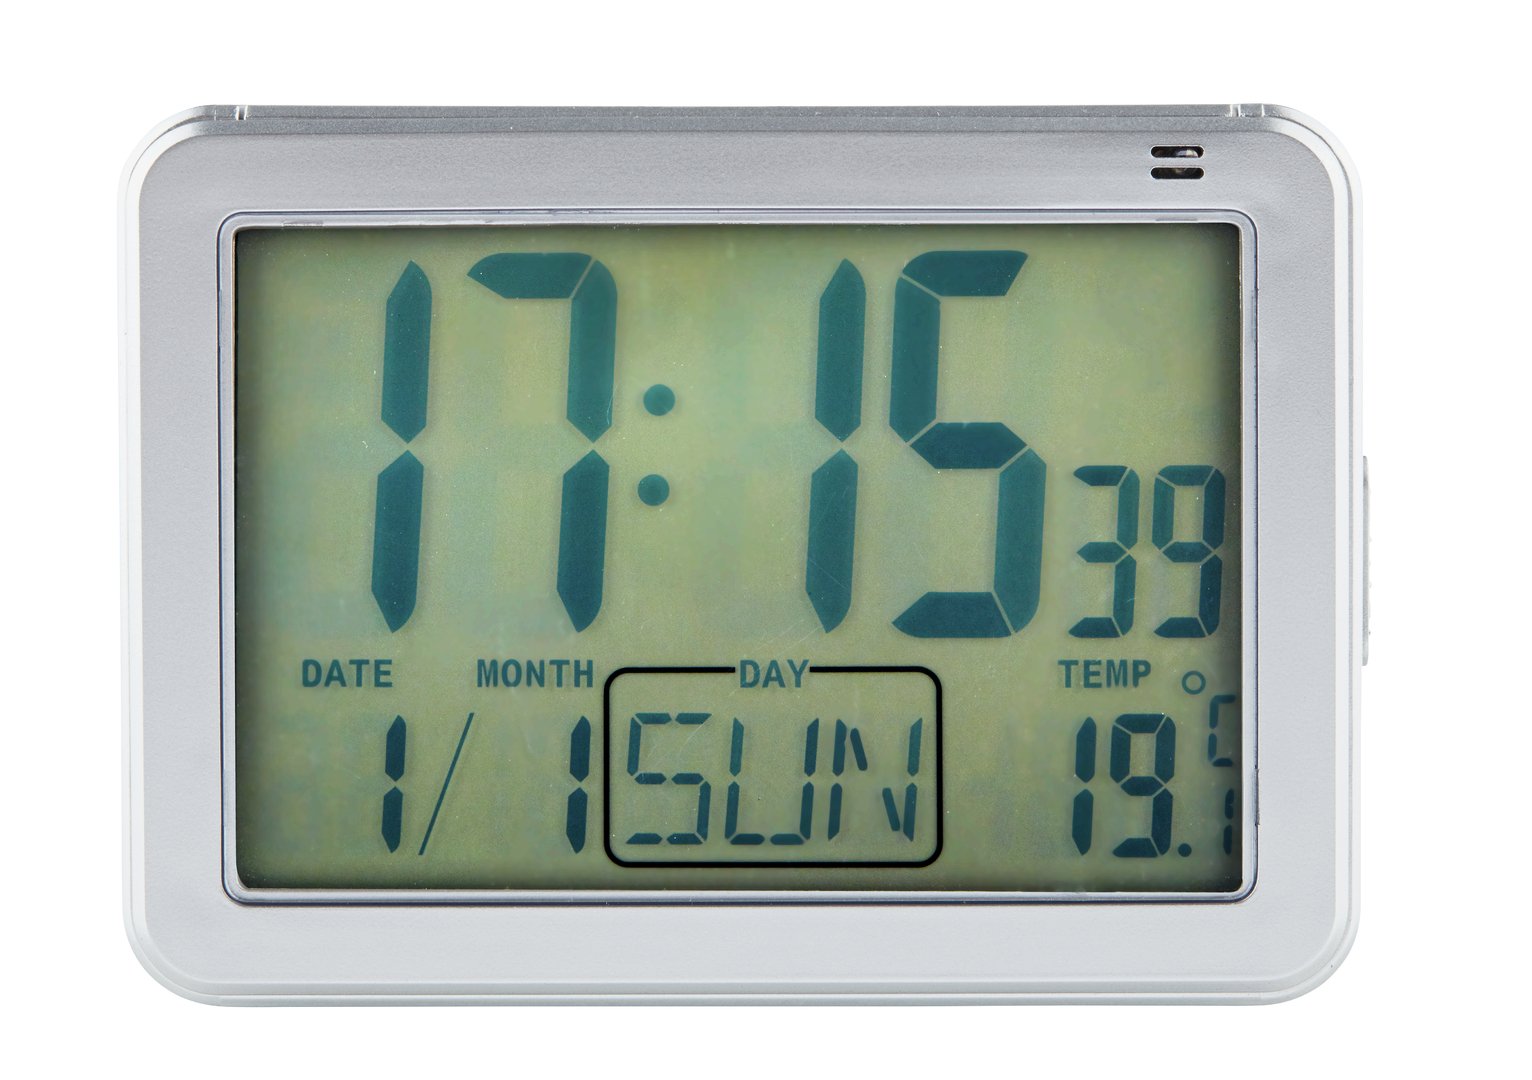 Constant Large Display Digital Alarm Clock Review